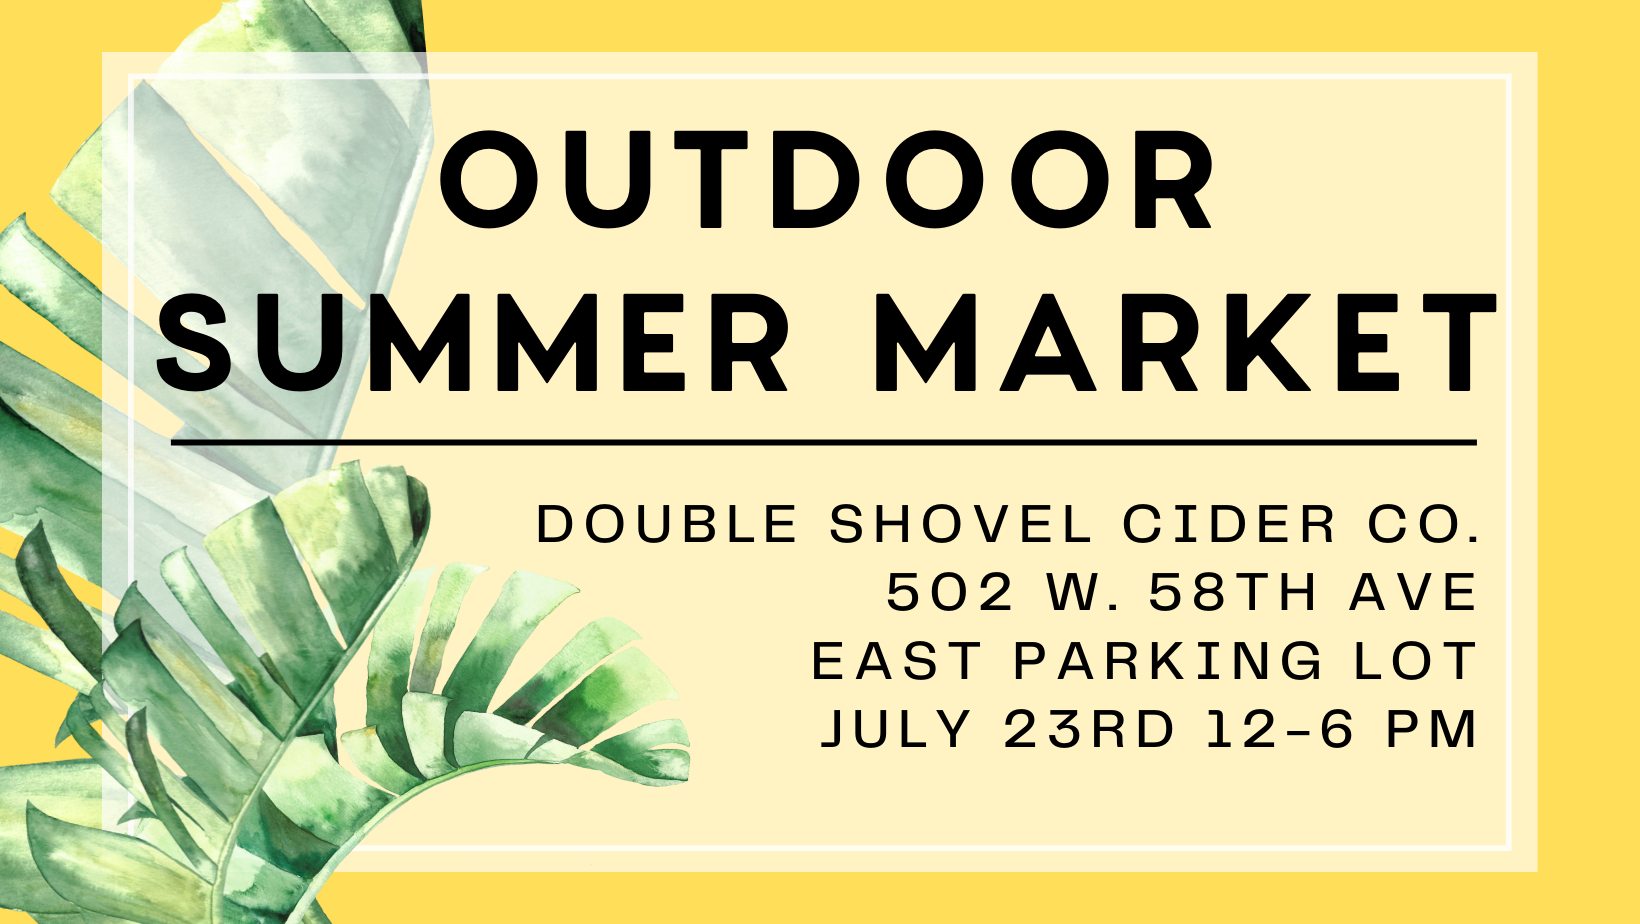 Outdoor Summer Market @ Double Shovel Cider Co